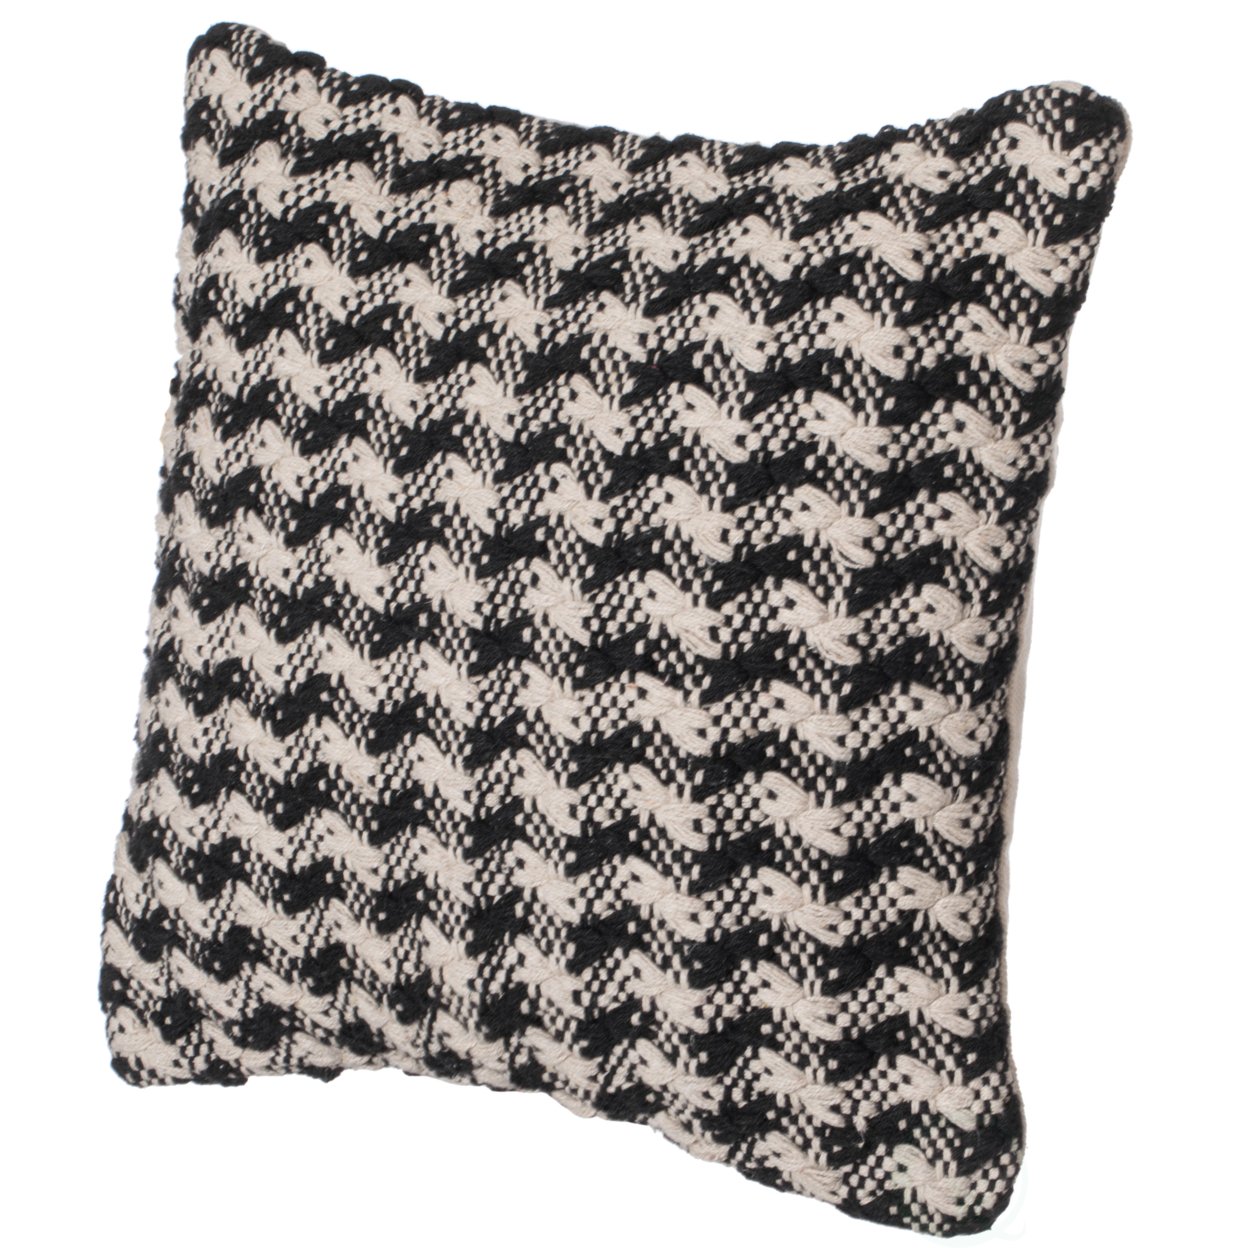 16 Handwoven Cotton Throw Pillow Cover Chevron & Gingham Design Black & White - Chevron